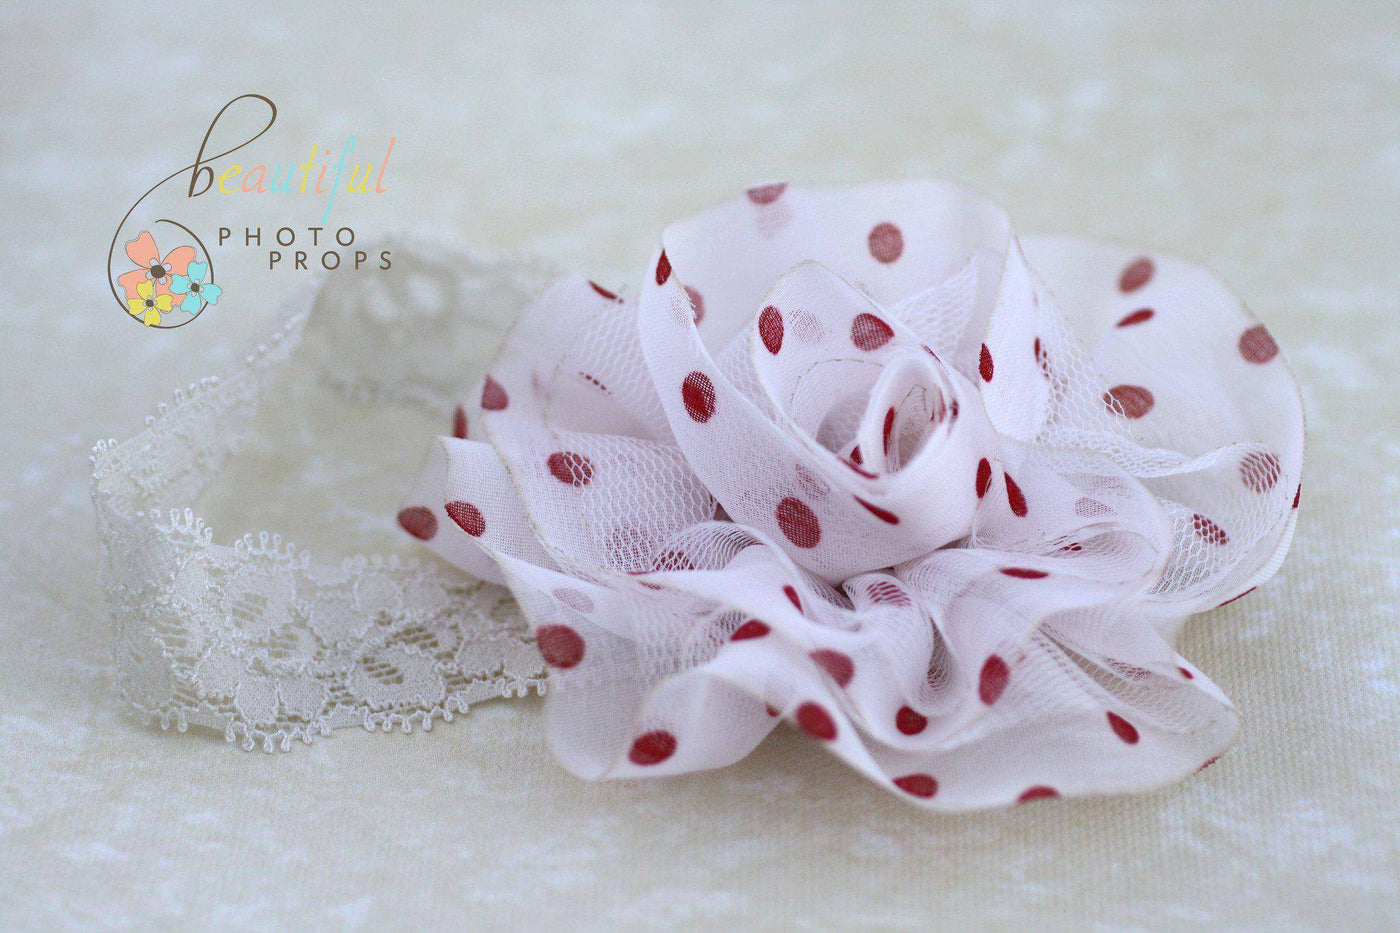 Red White Polka Dot Flower Headband - Beautiful Photo Props